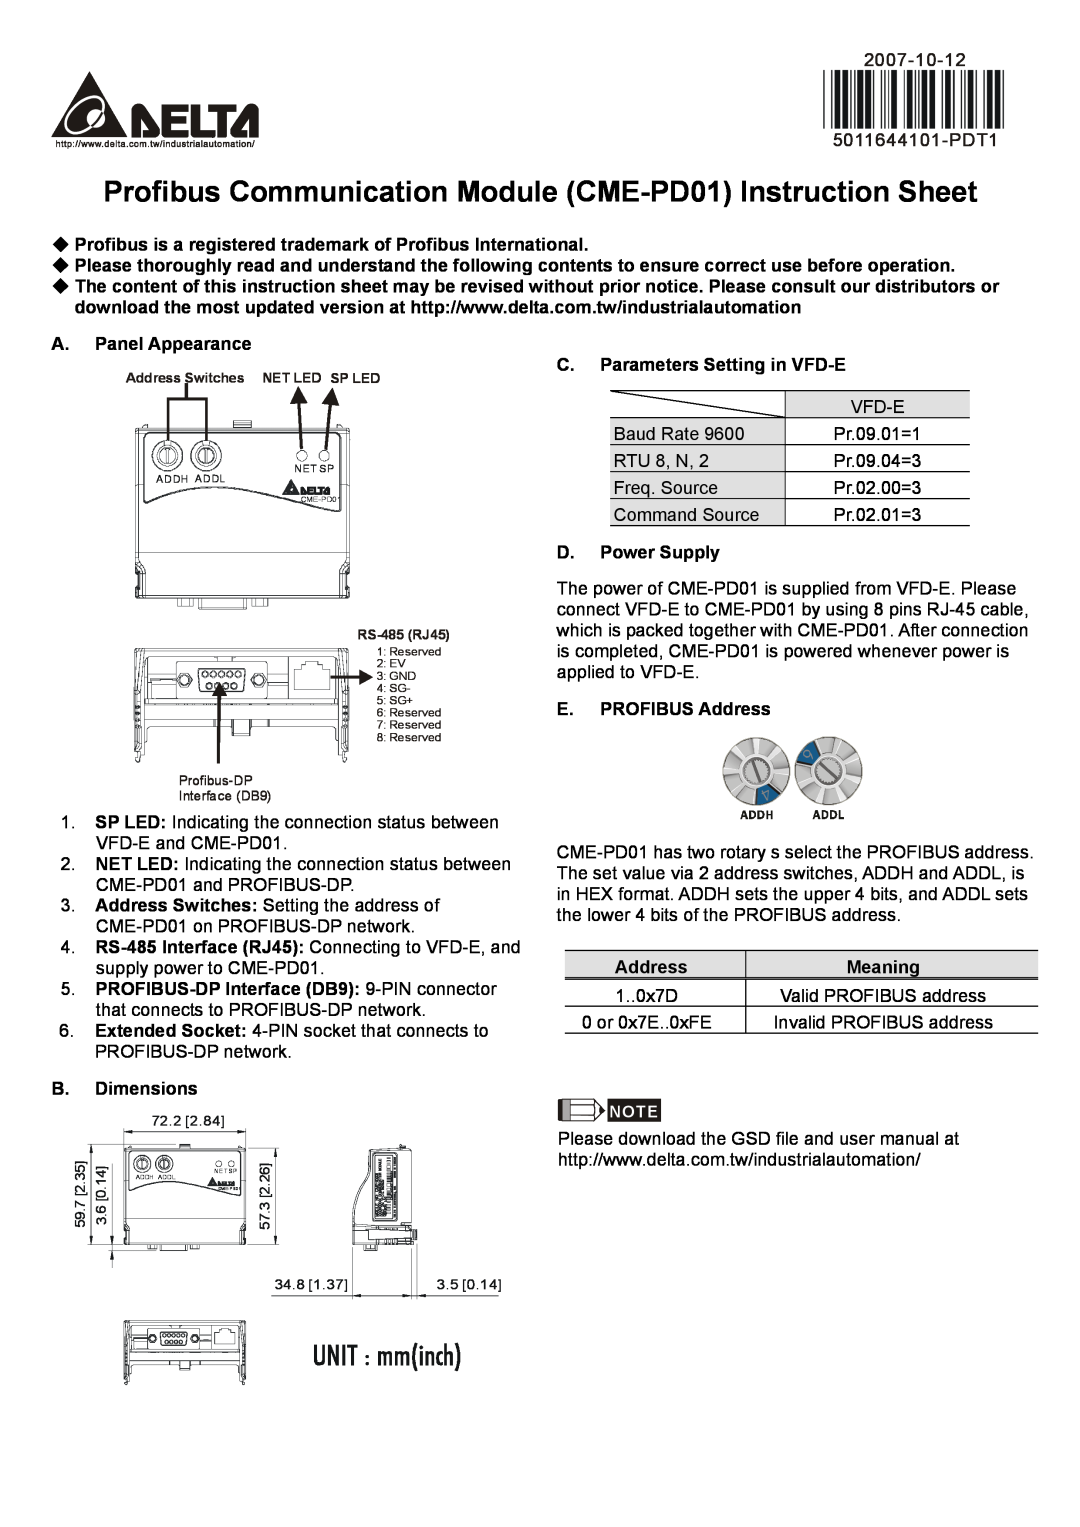 Delta Electronics instruction sheet Profibus Communication Module CME-PD01 Instruction Sheet 